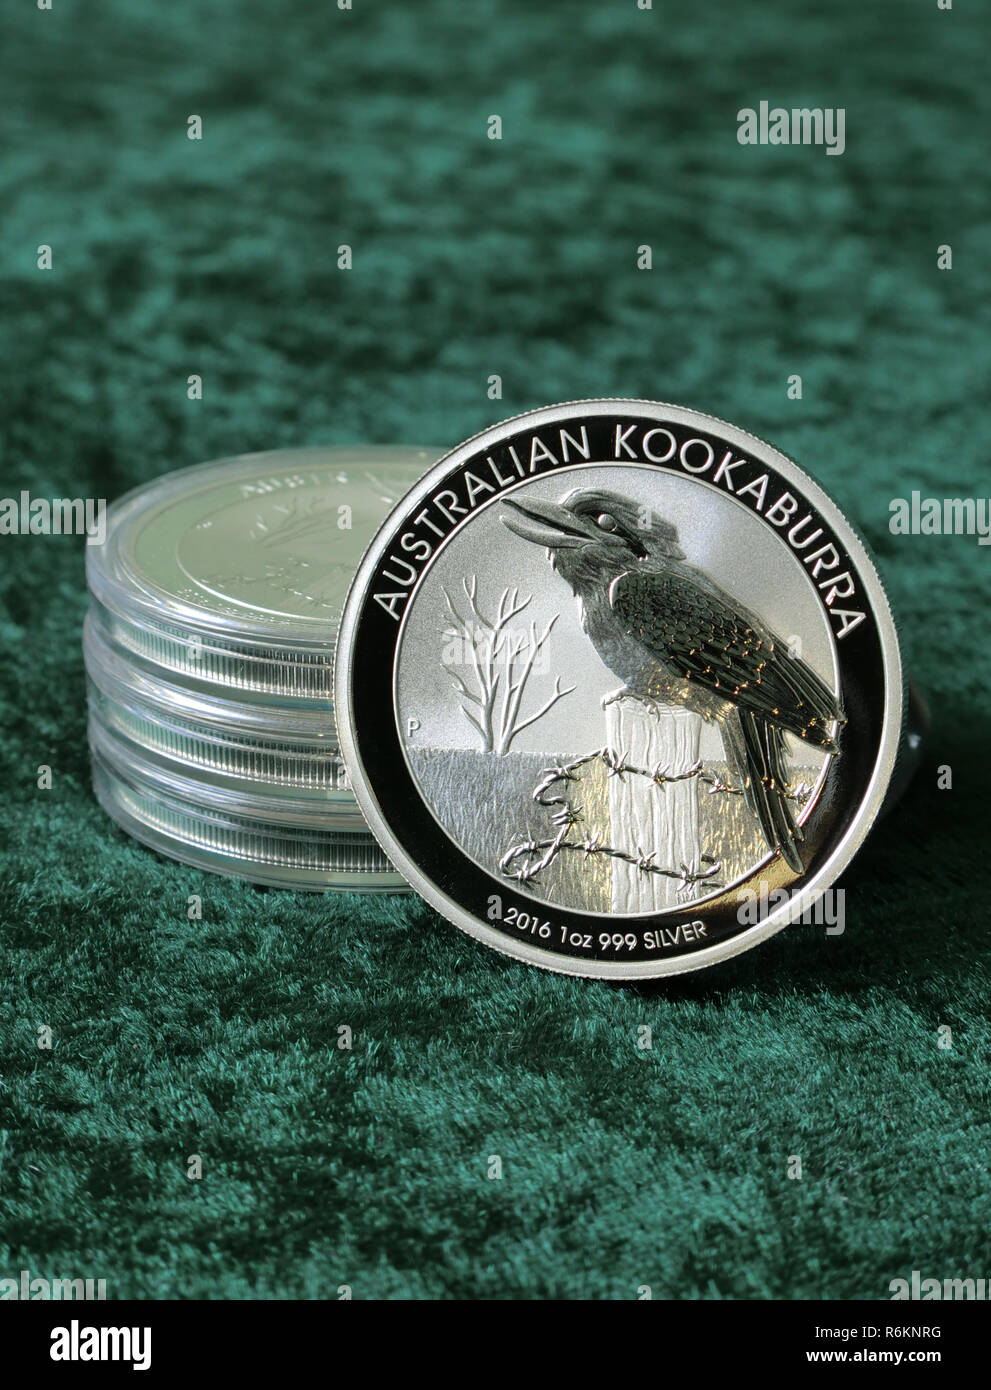 1 Troy Ounce of Pure Solid Silver Australian Kookaburra Coin Stock Photo